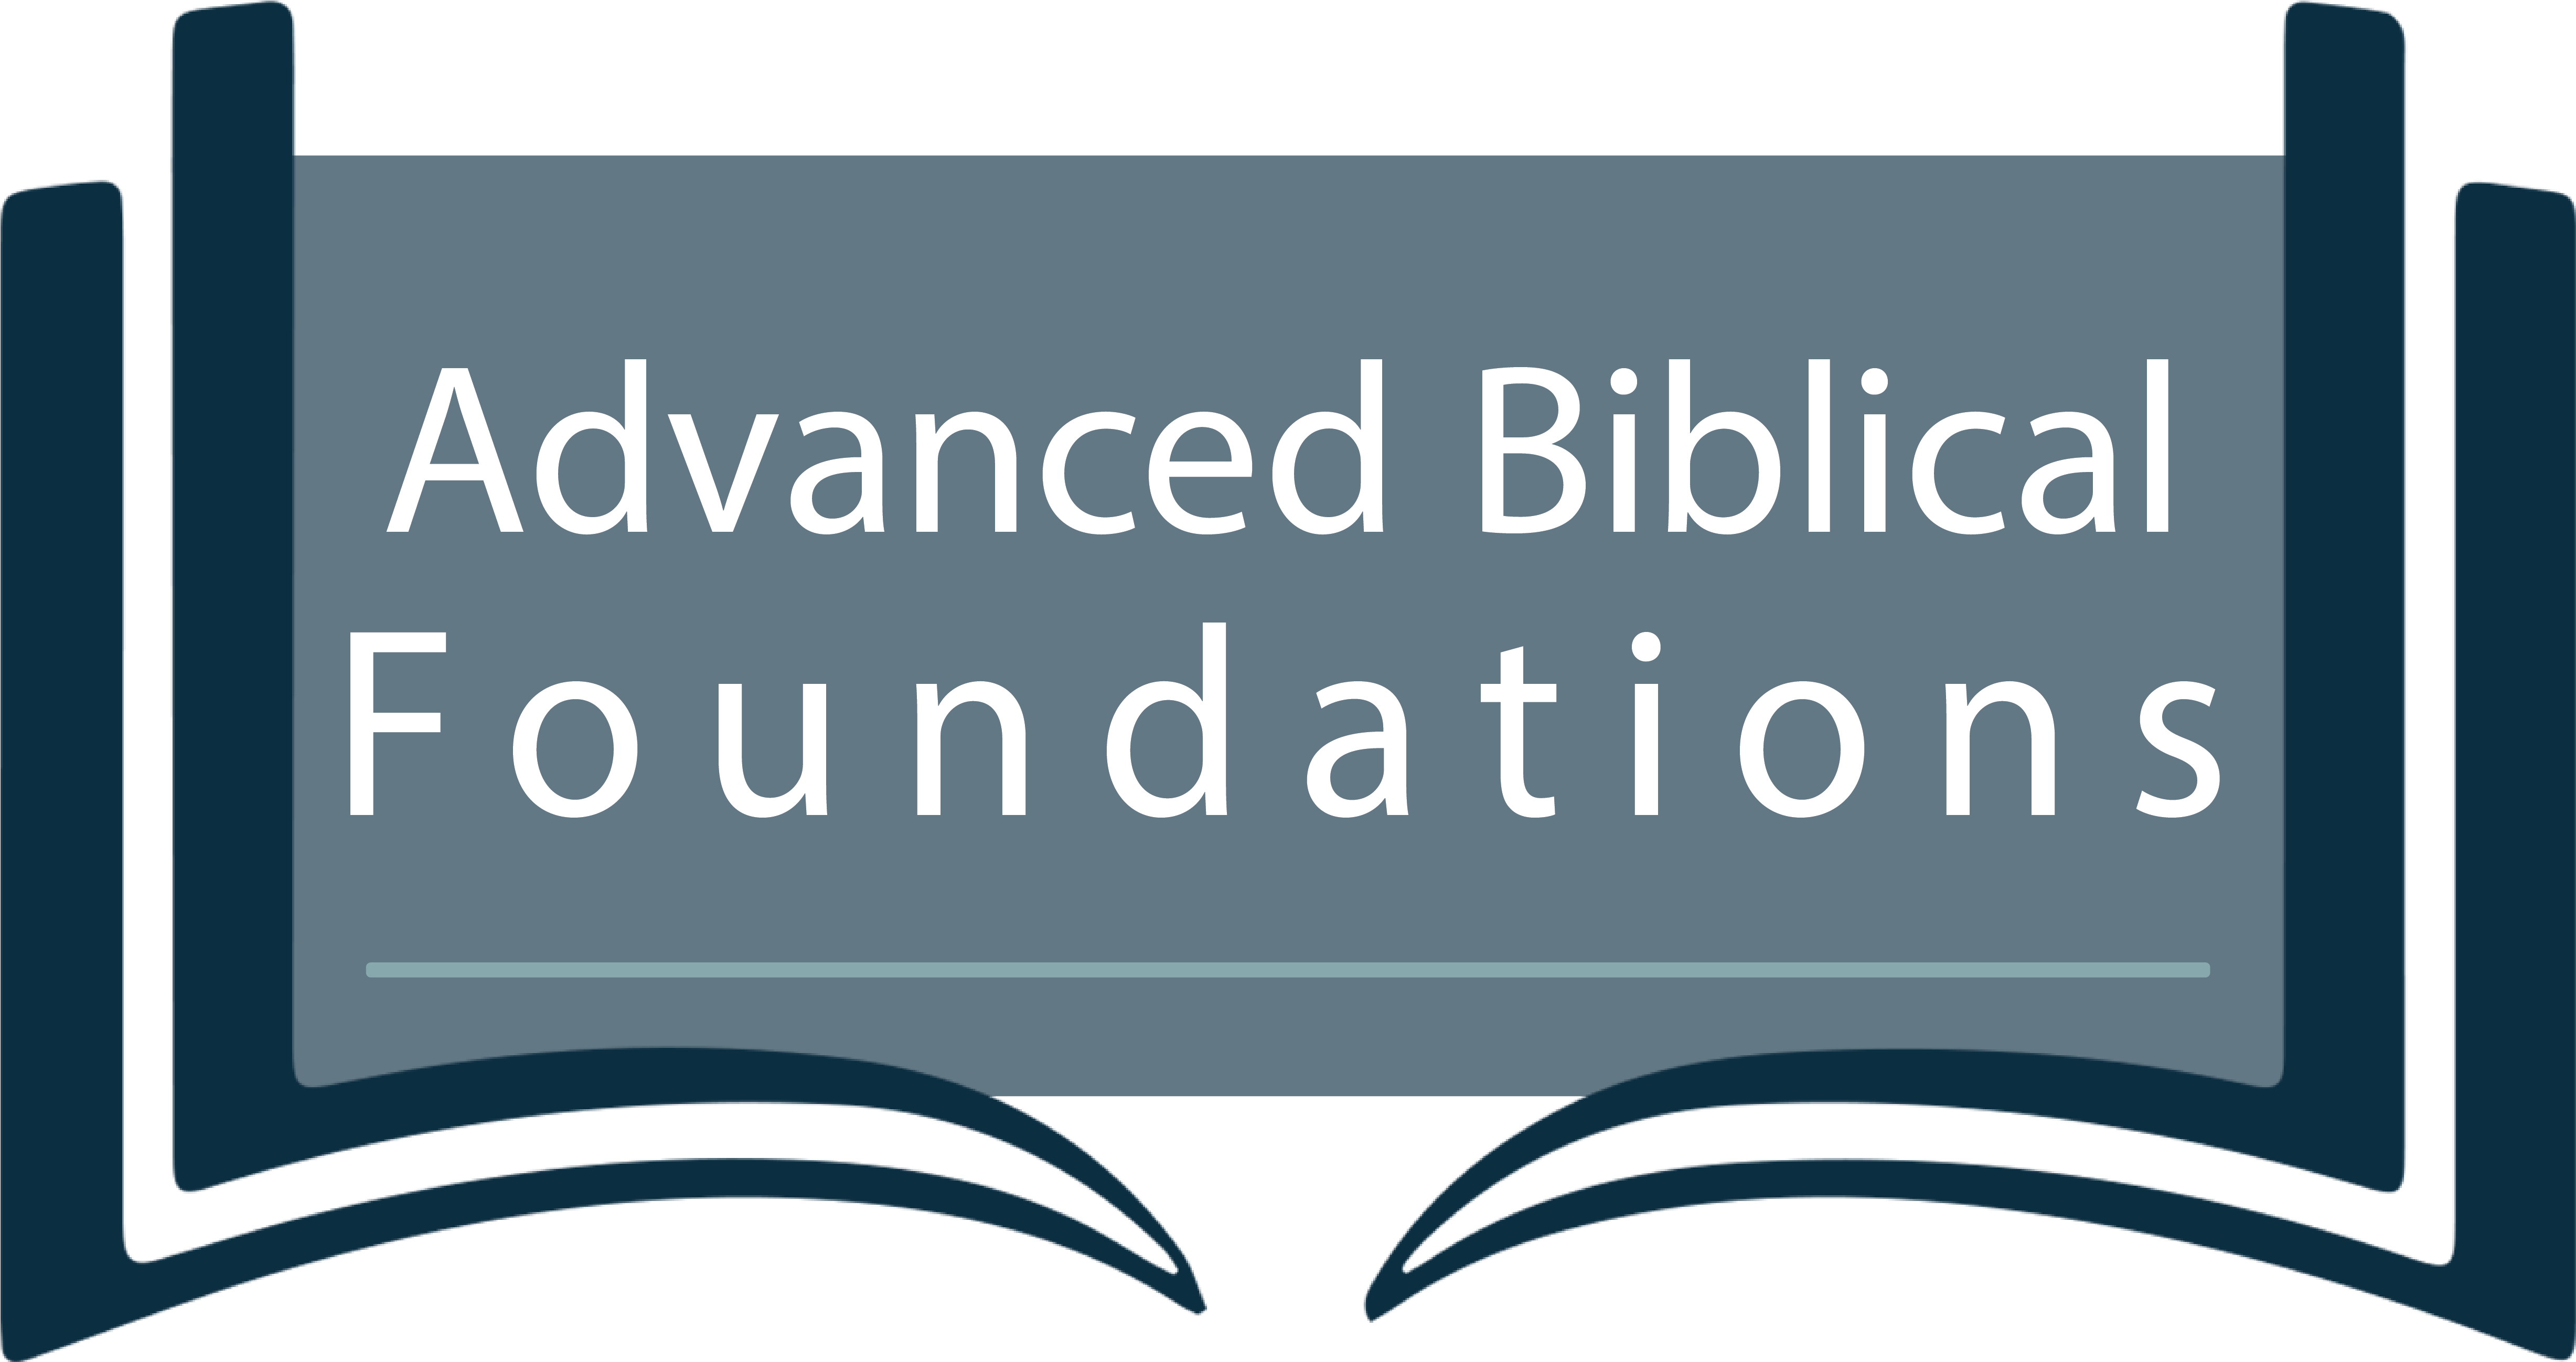 Advanced Biblical Foundations